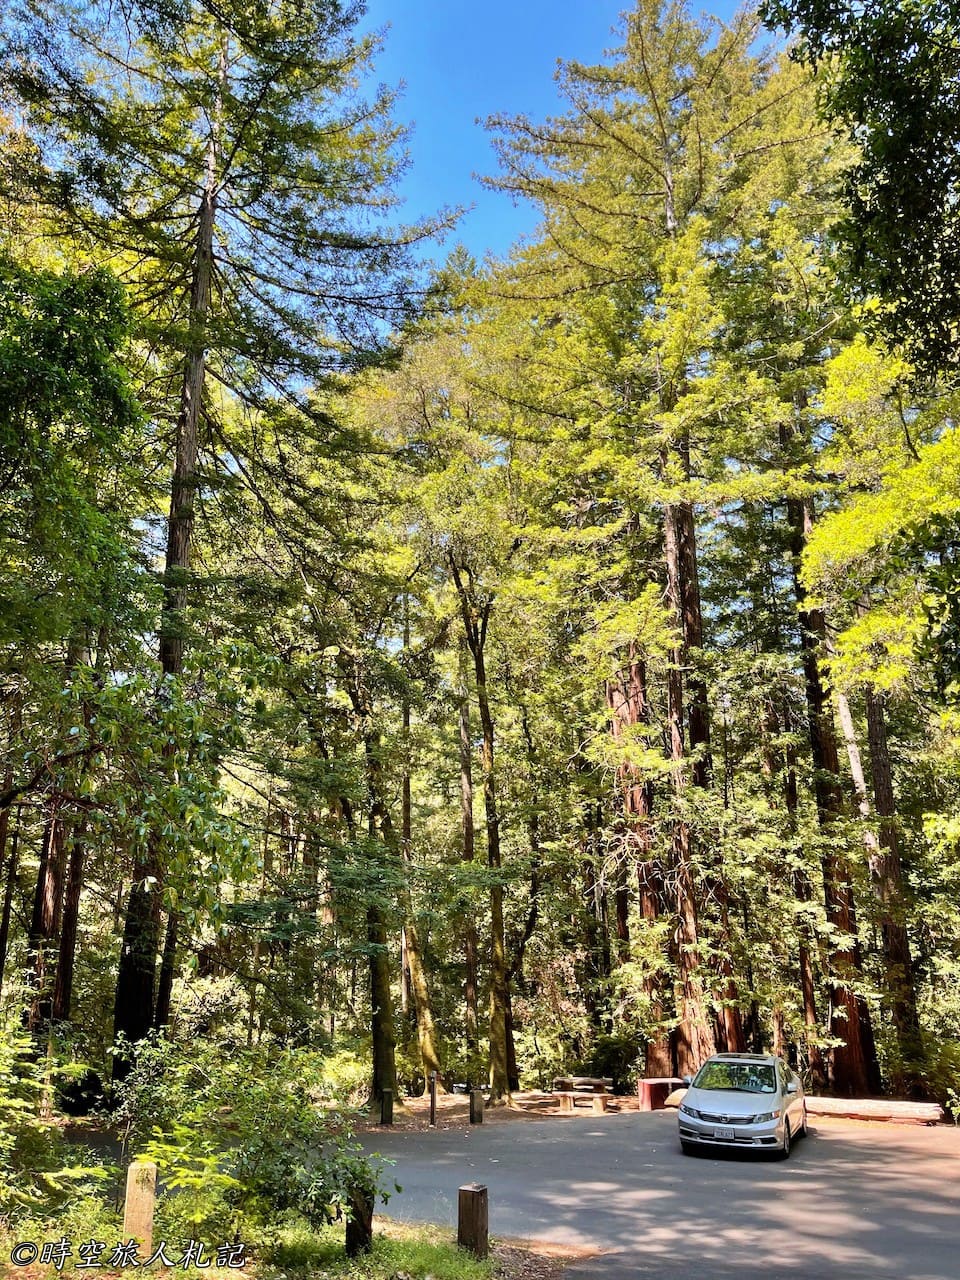 Portola redwood state park,Portola redwood campground,Tiptoe falls 12